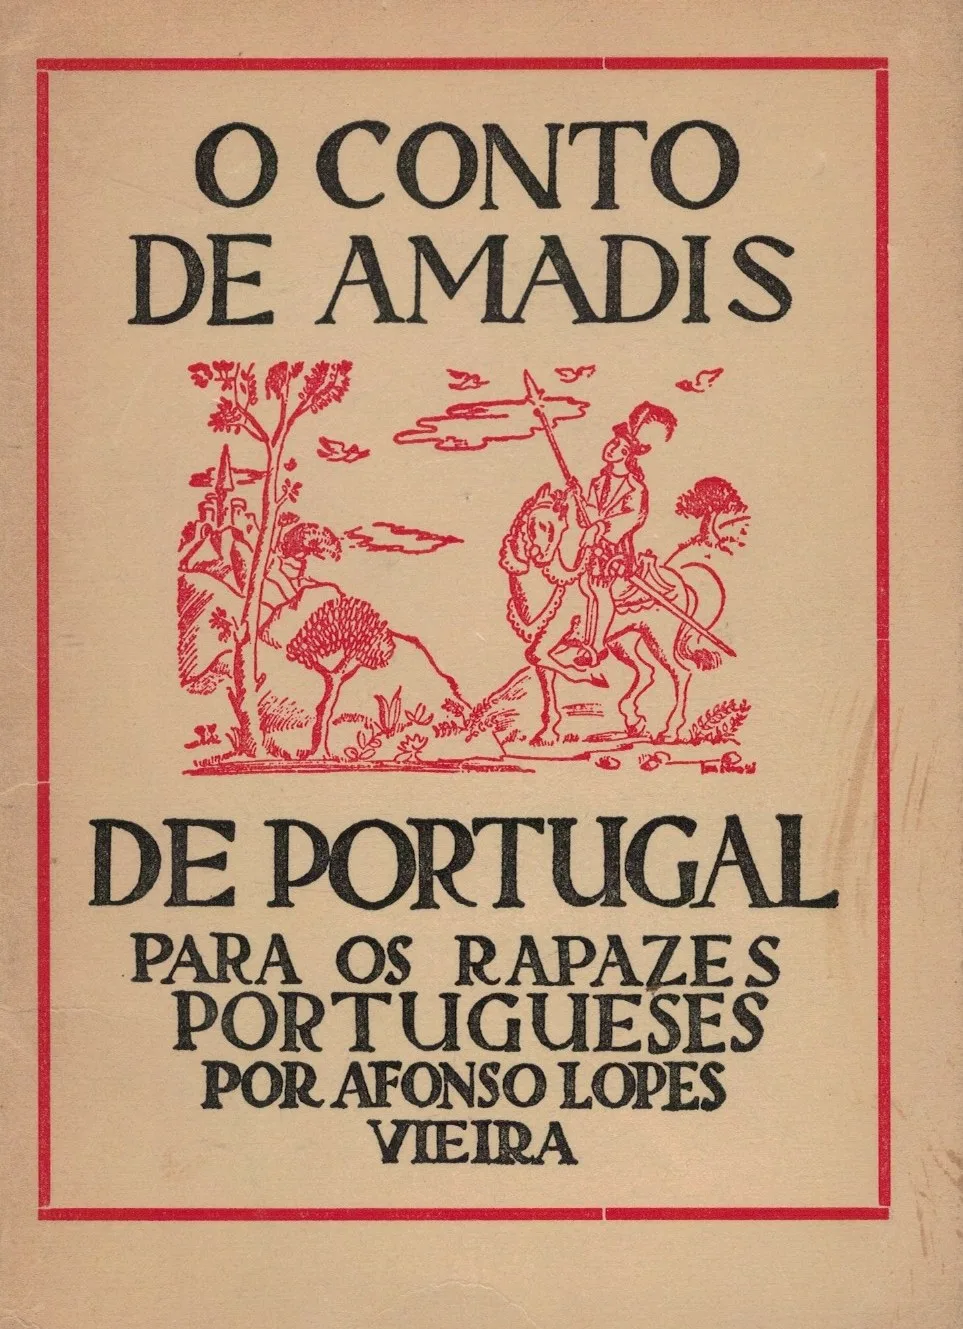 Conto de Amadis de Afonso Lopes Vieira